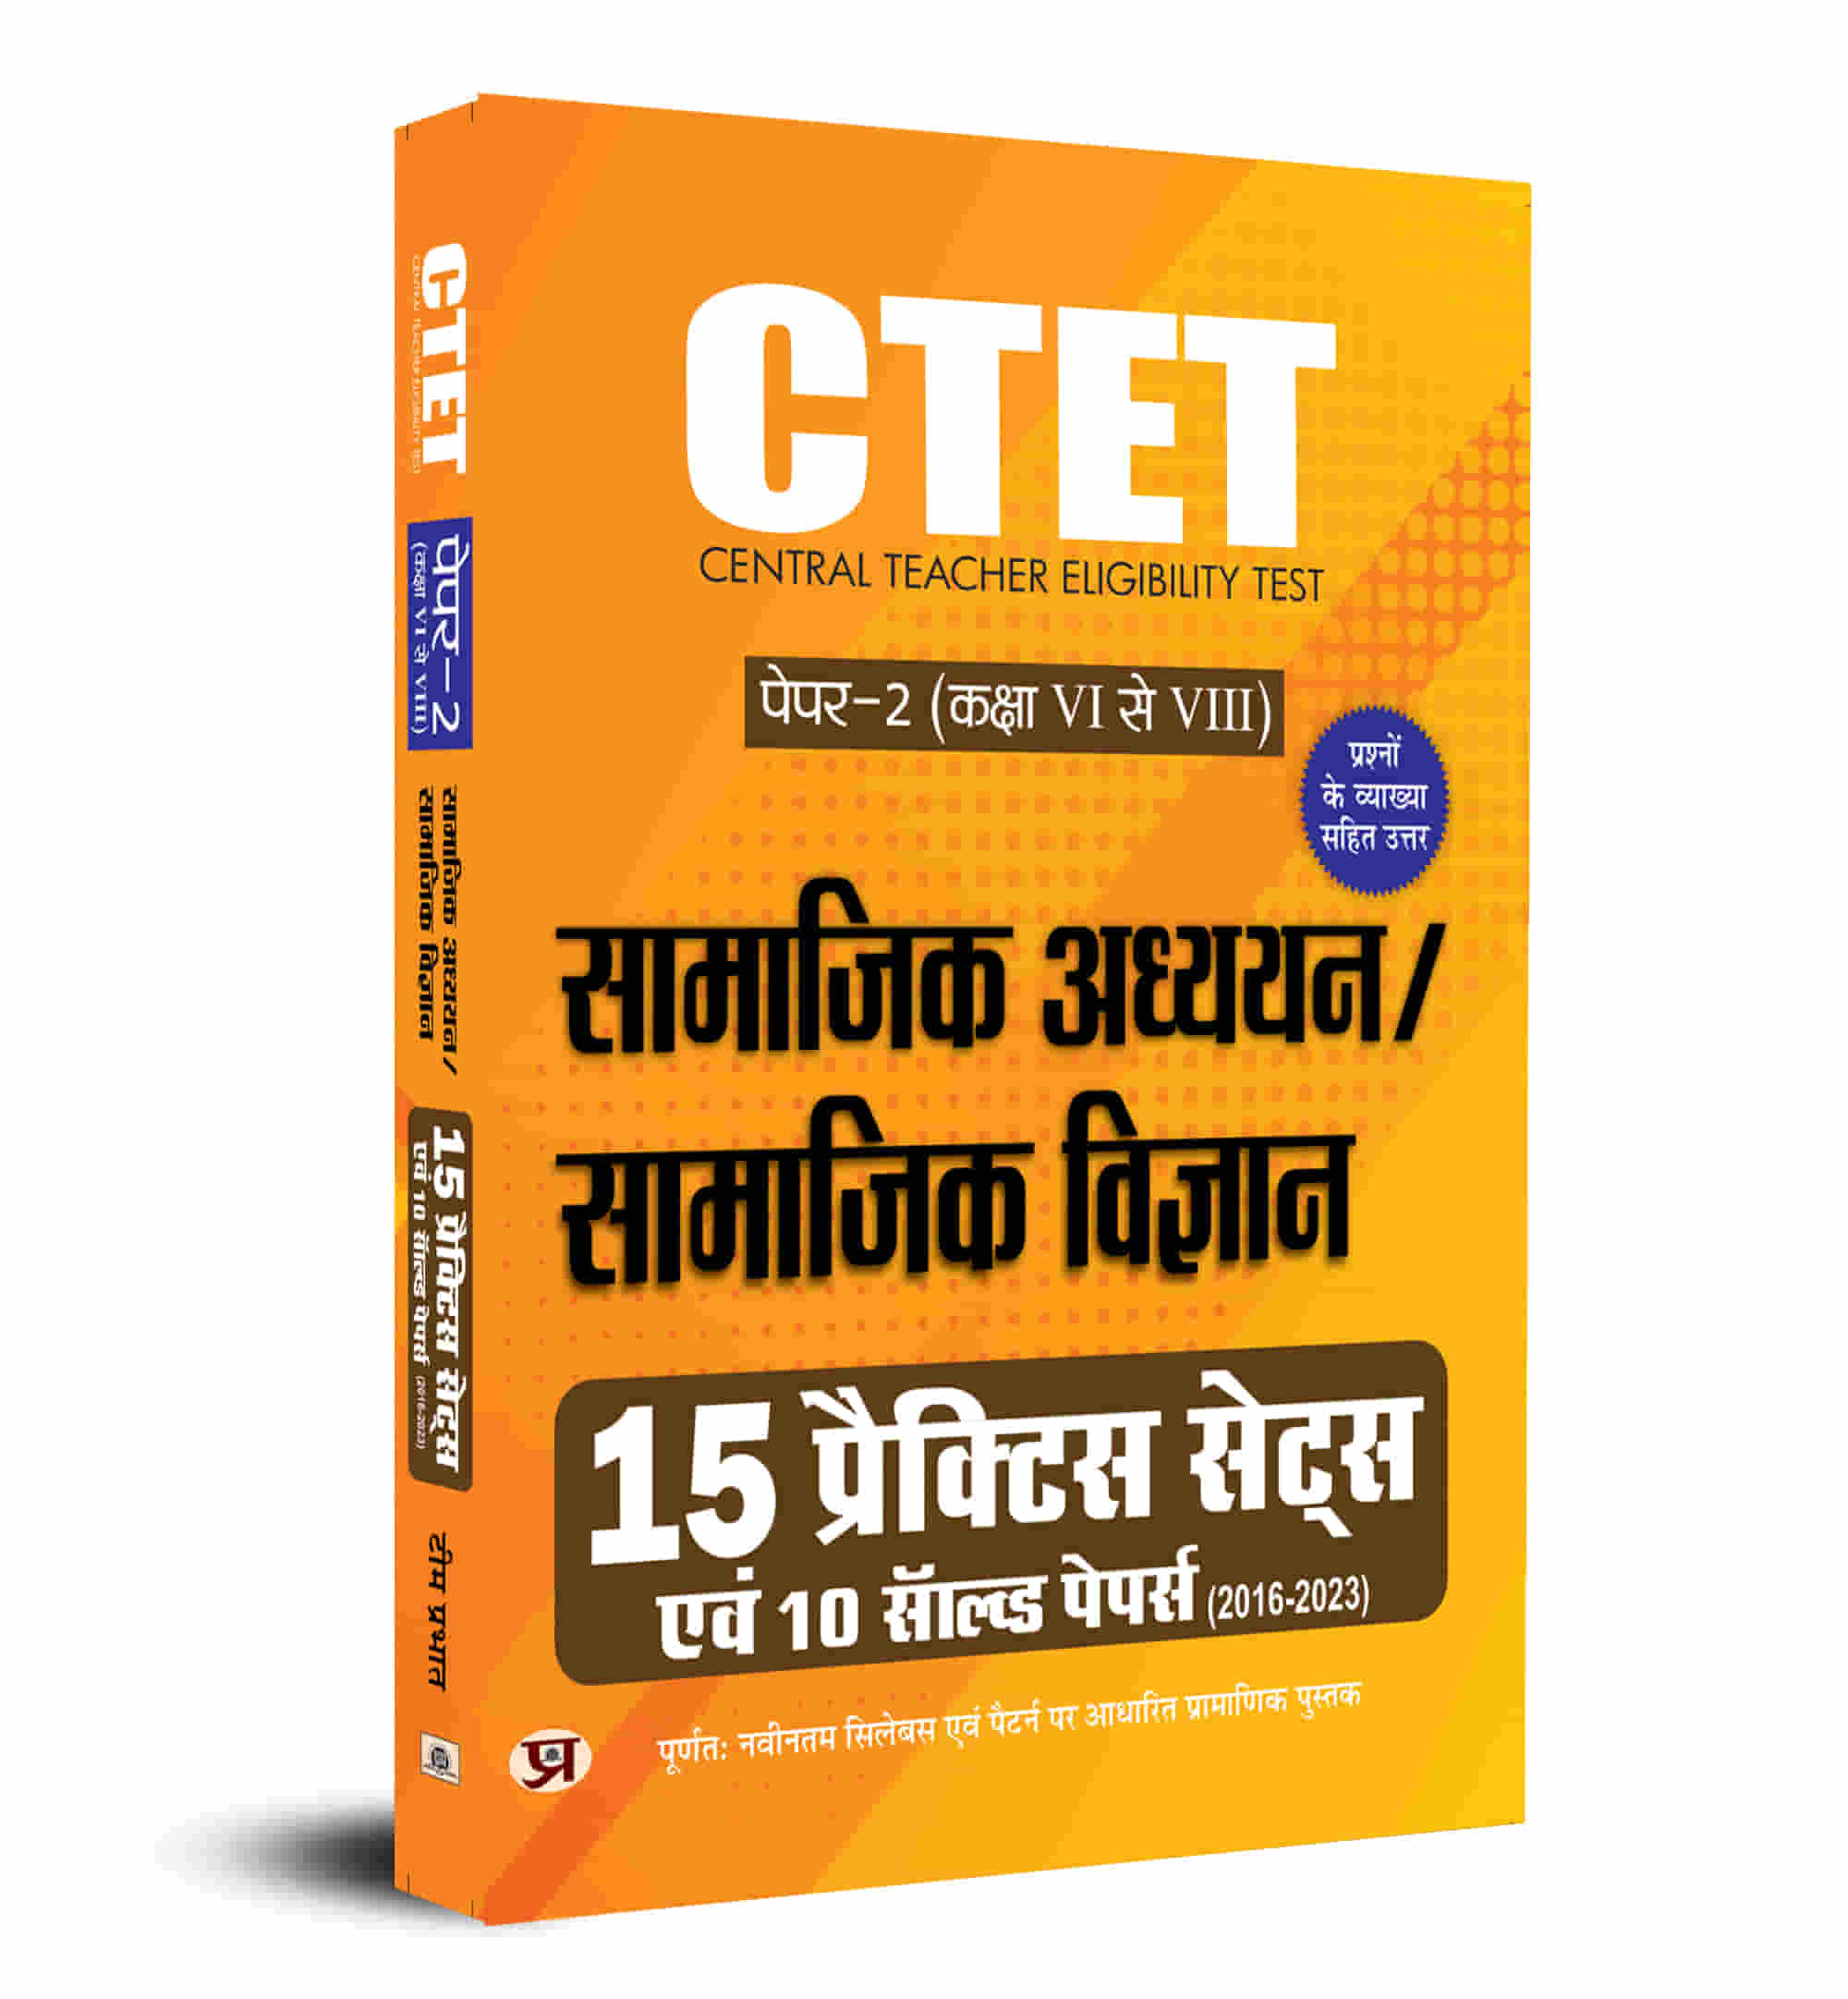 CTET Central Teacher Eligibility Test Paper-2 (Class 6 - 8) Samajik Adhyayan/Samajik Vigyan (Social Study / Social Science) 10 Solved Papers & 15 Practice Sets